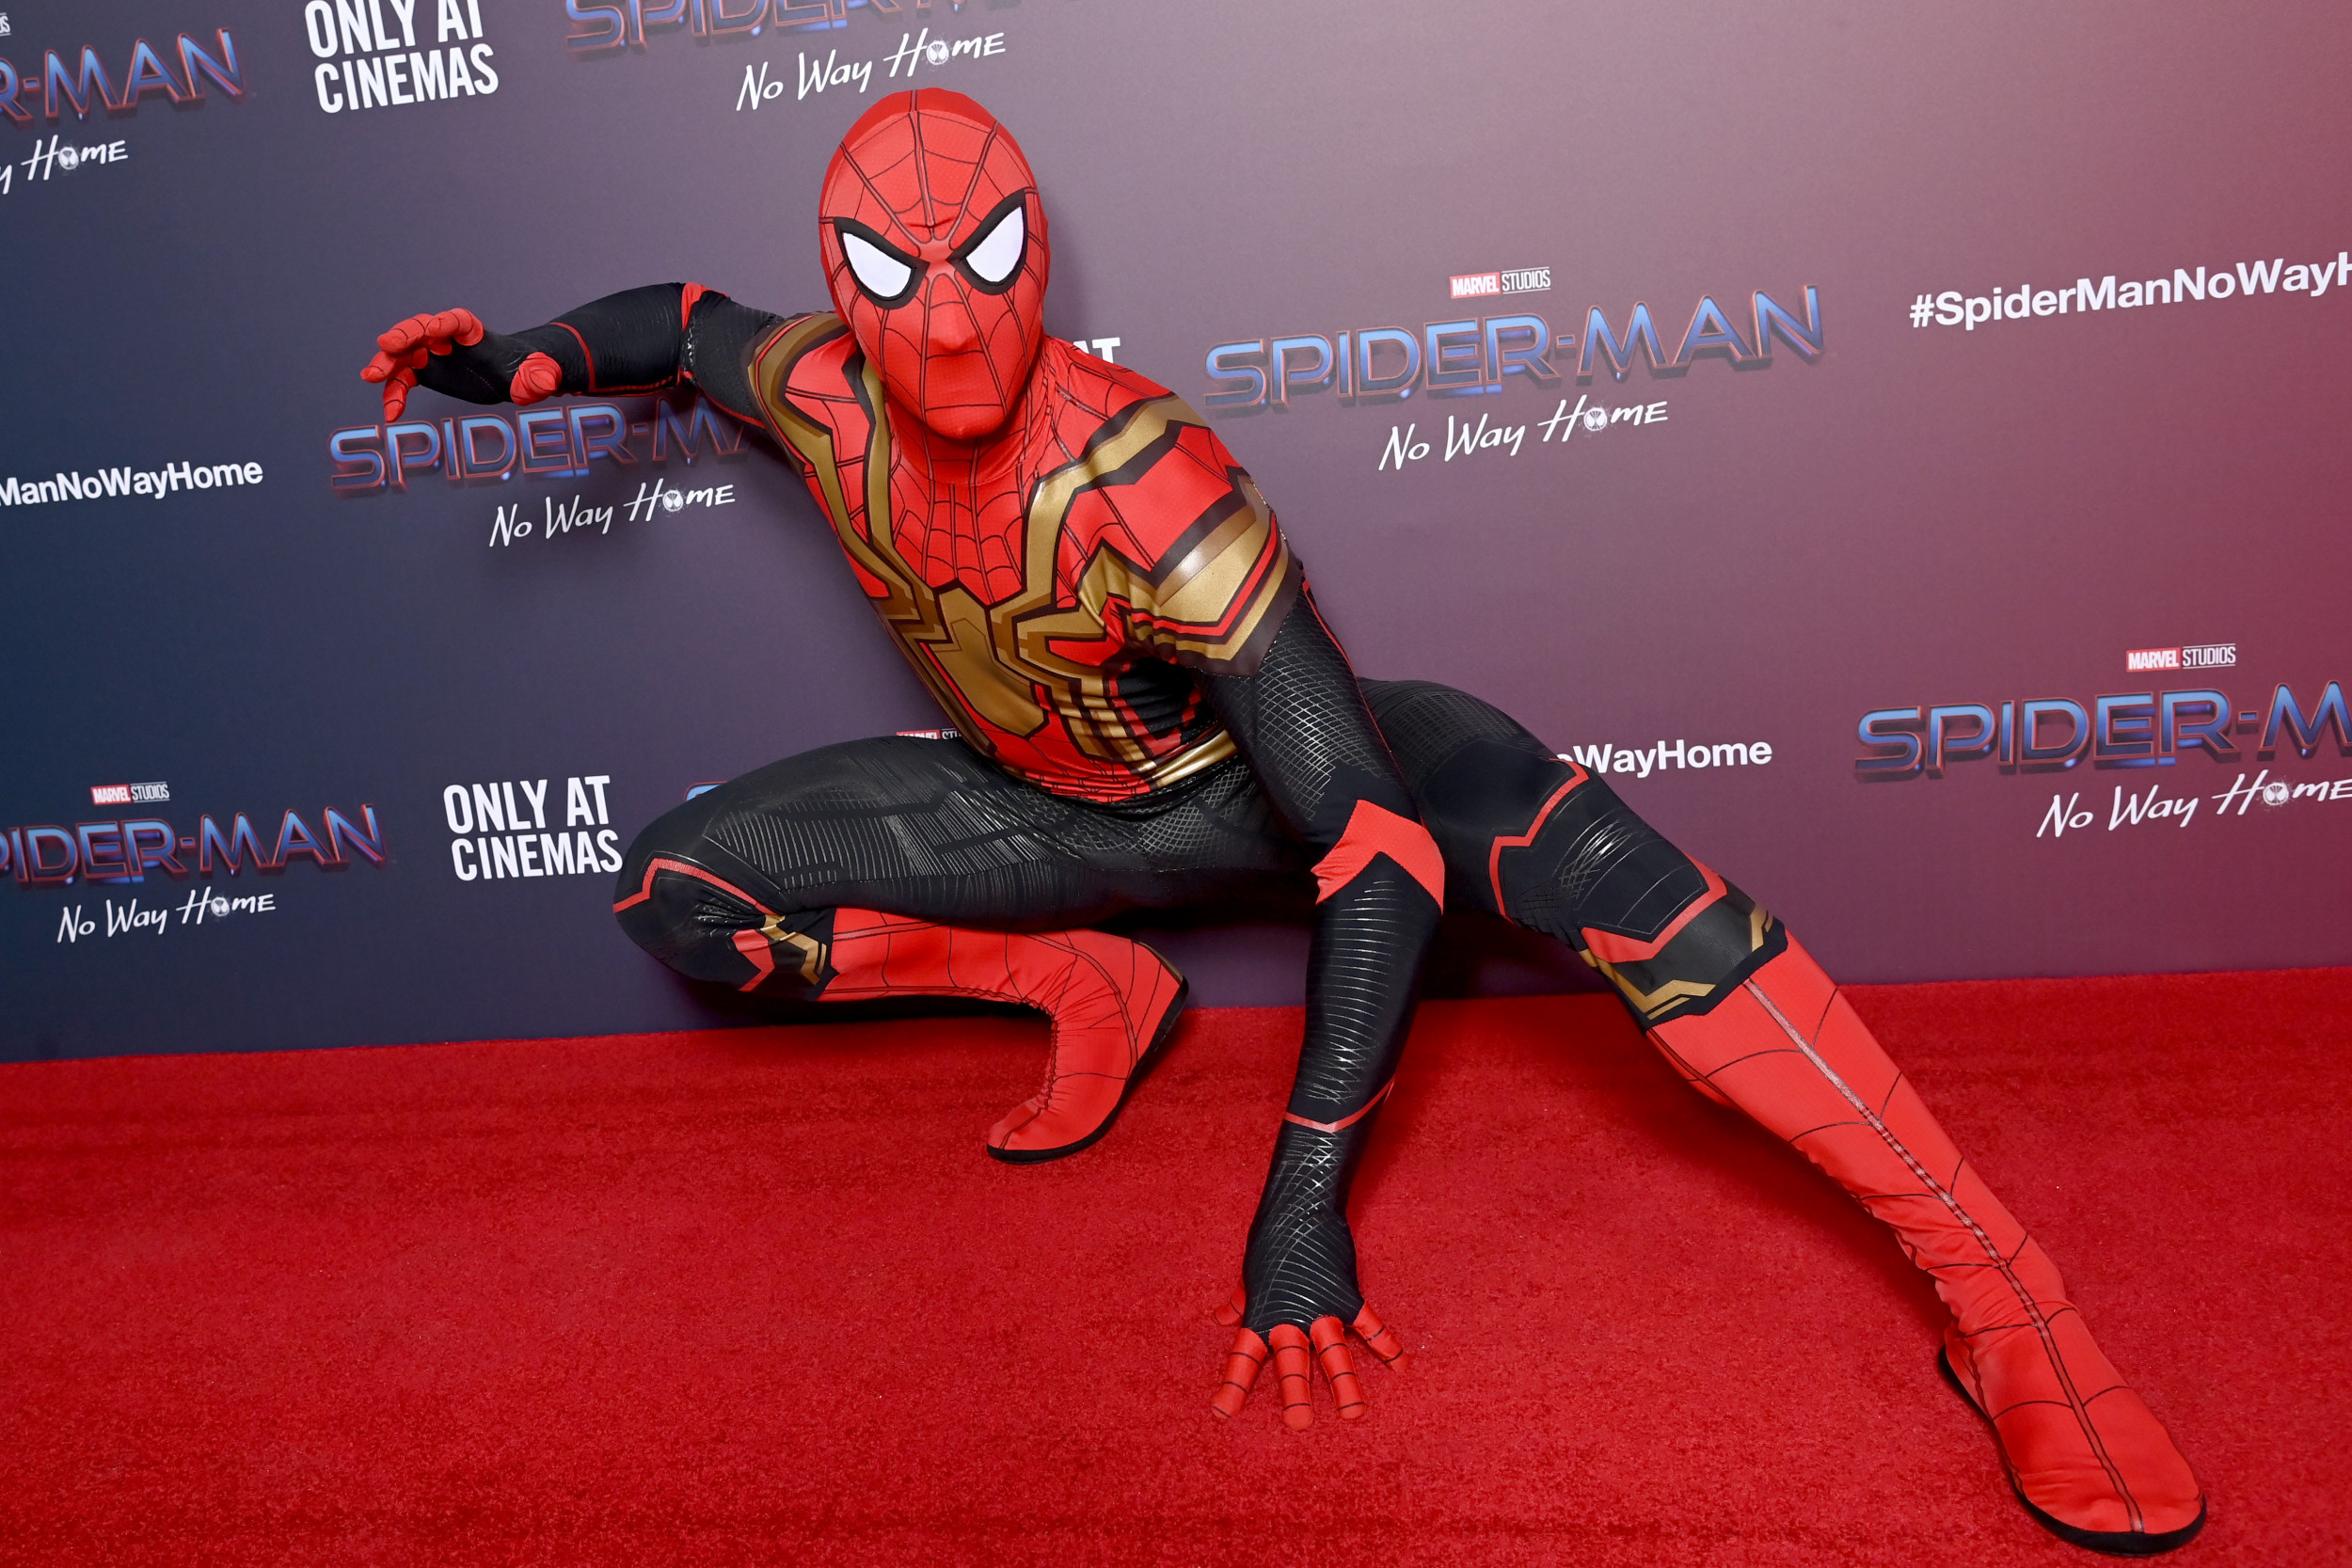 Spider-Men Recreate Iconic Meme Ahead of 'No Way Home' Digital Release